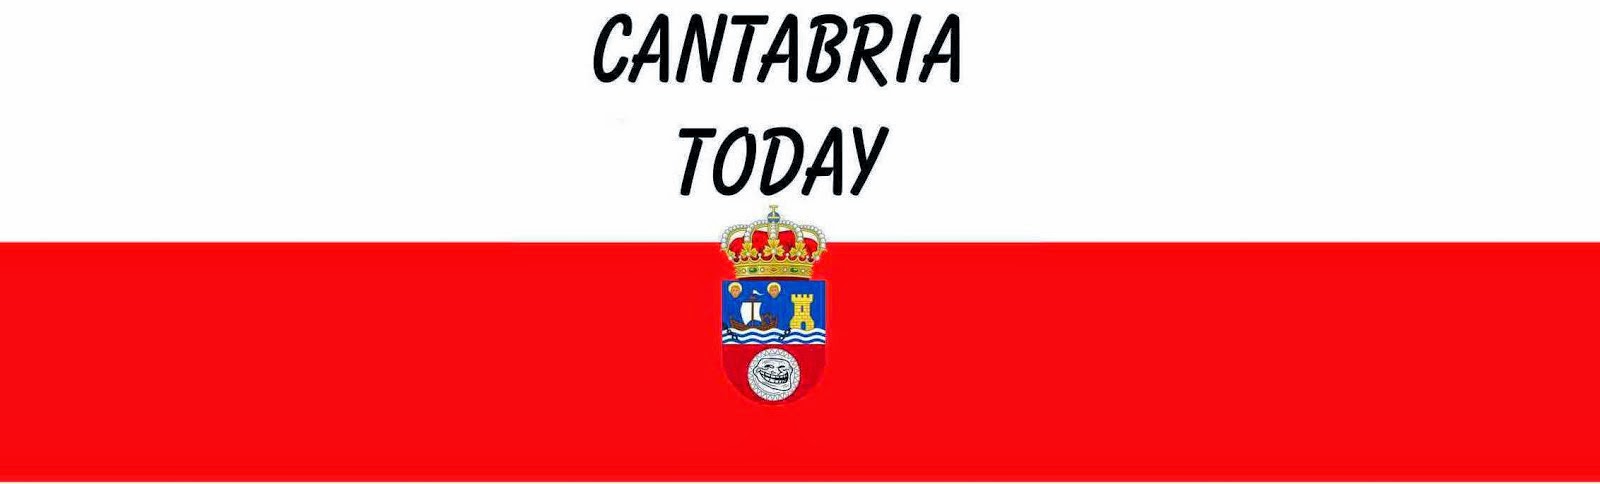 Cantabria Today